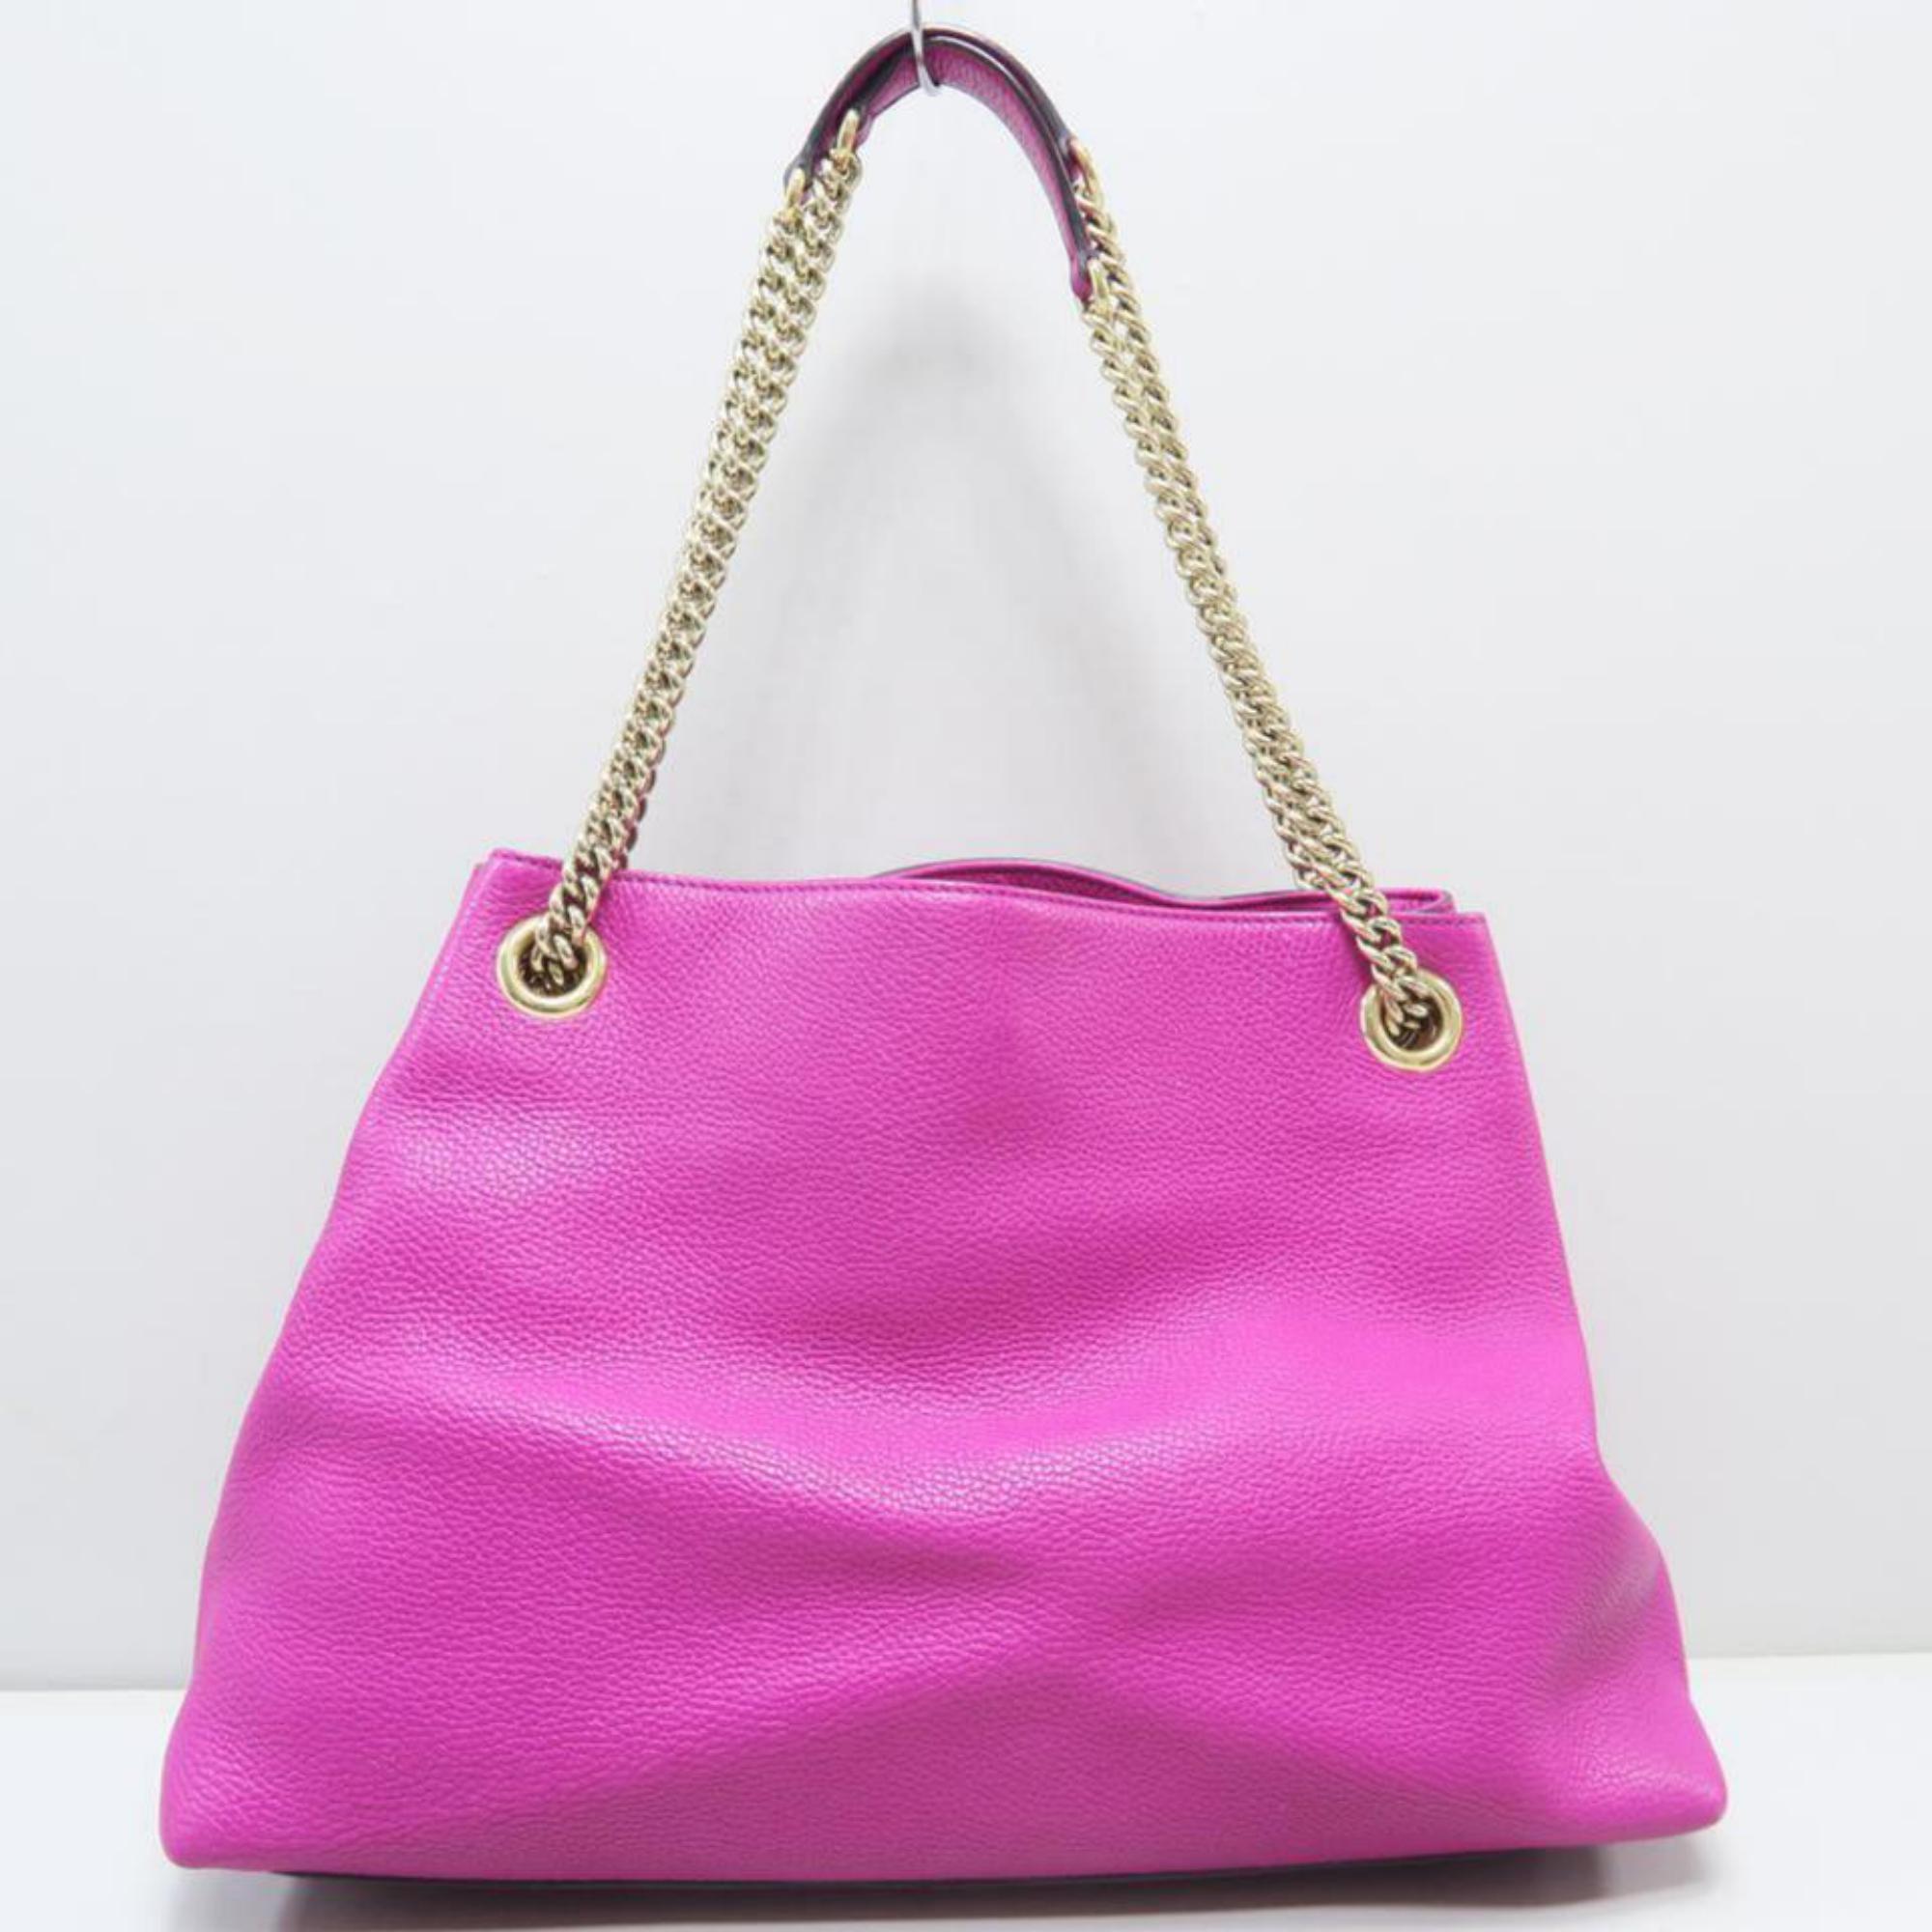 Gucci Soho Fringe Tassel Fuchsia Chain Tote 869084 Pink Leather Shoulder Bag 6